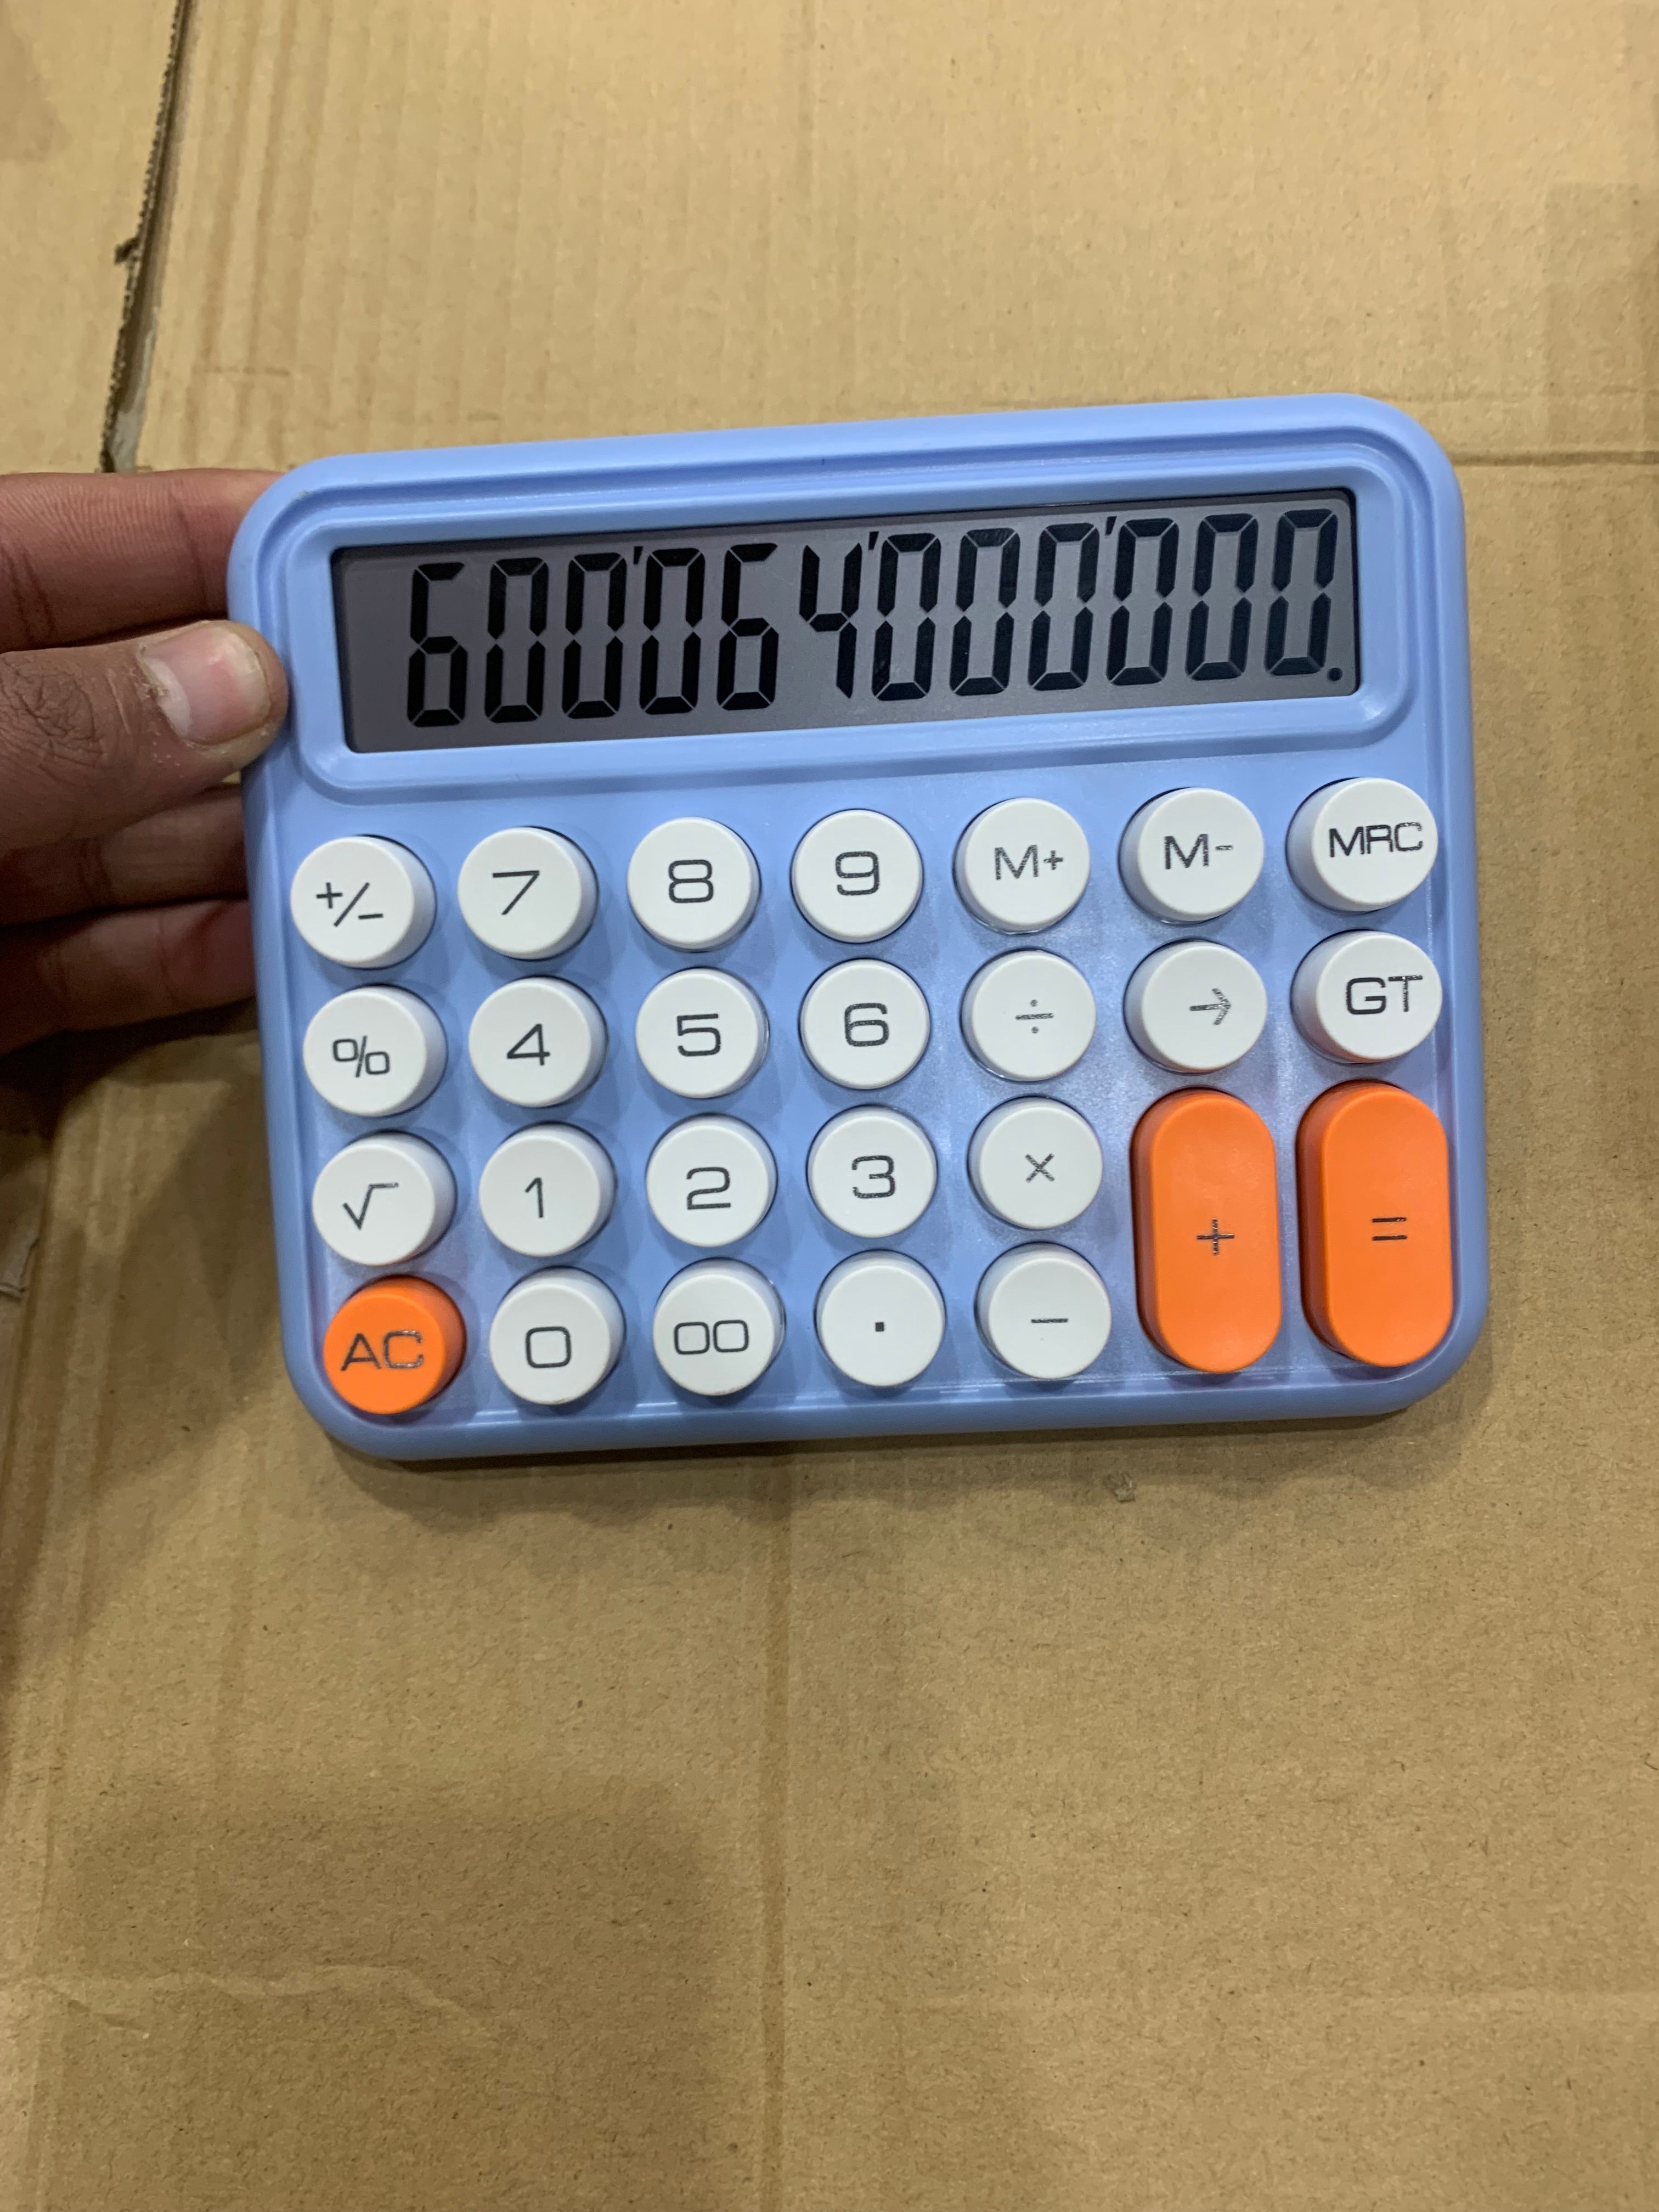 DEXIN calculator